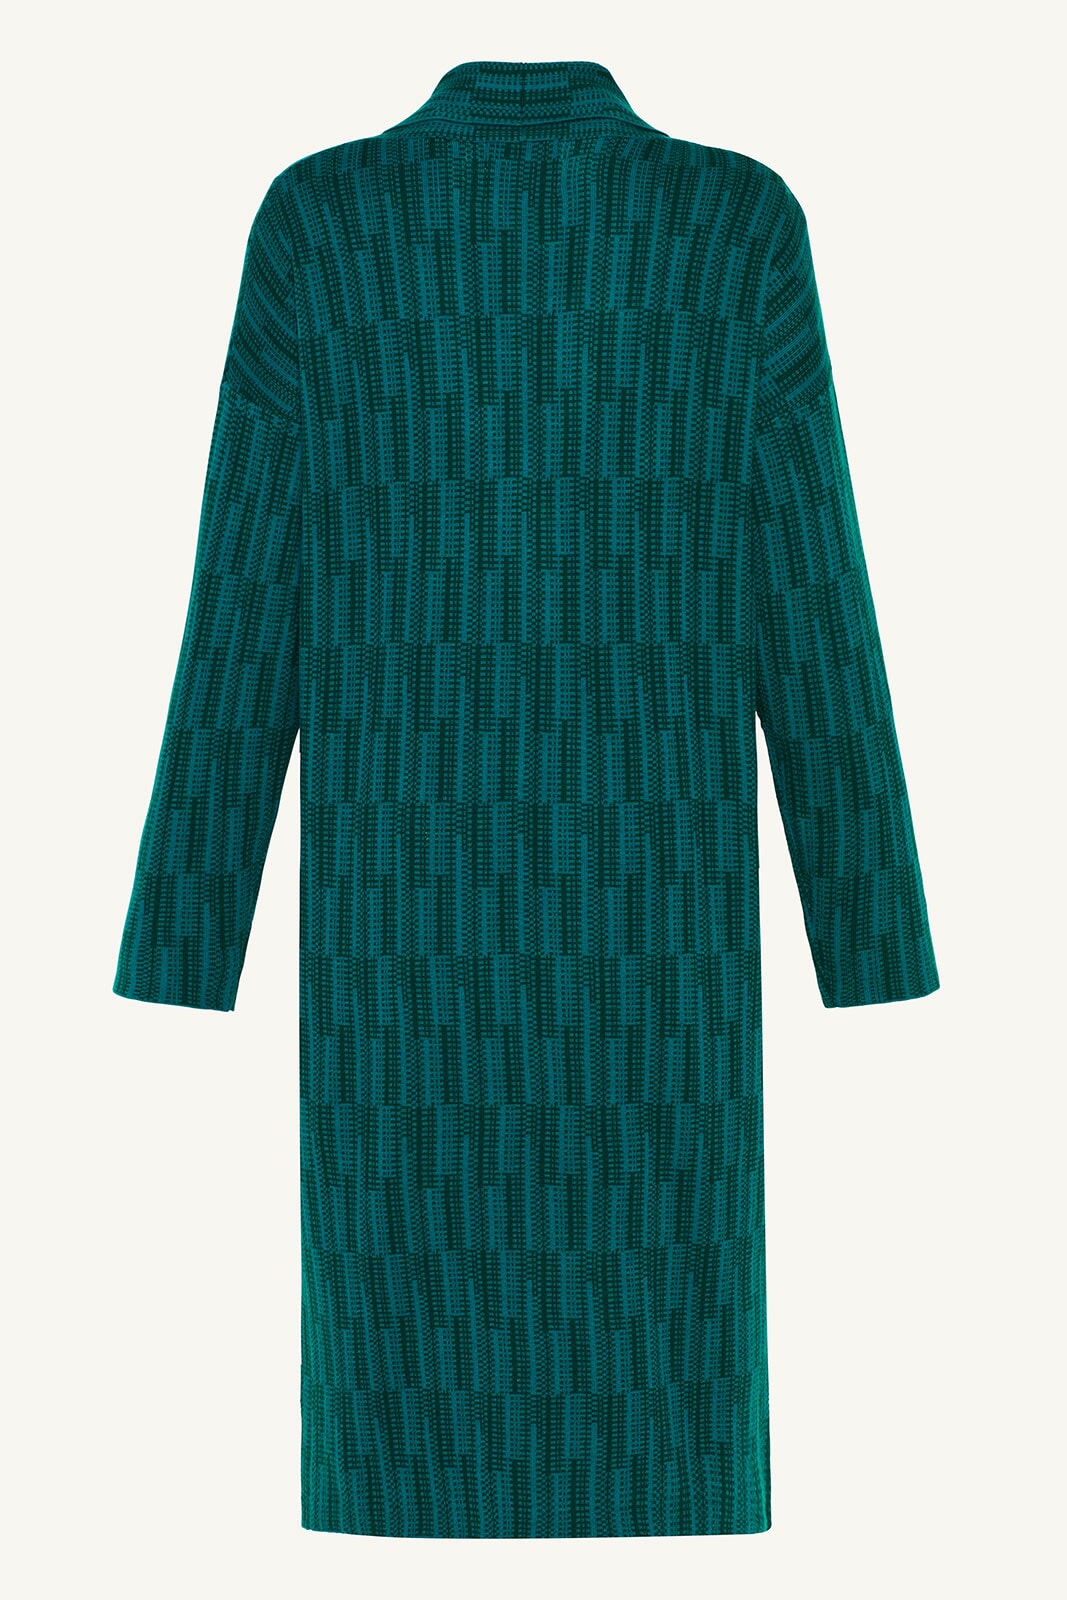 Jacquard Merino Wool Knit Cardigan - Deep Teal Clothing epschoolboard 